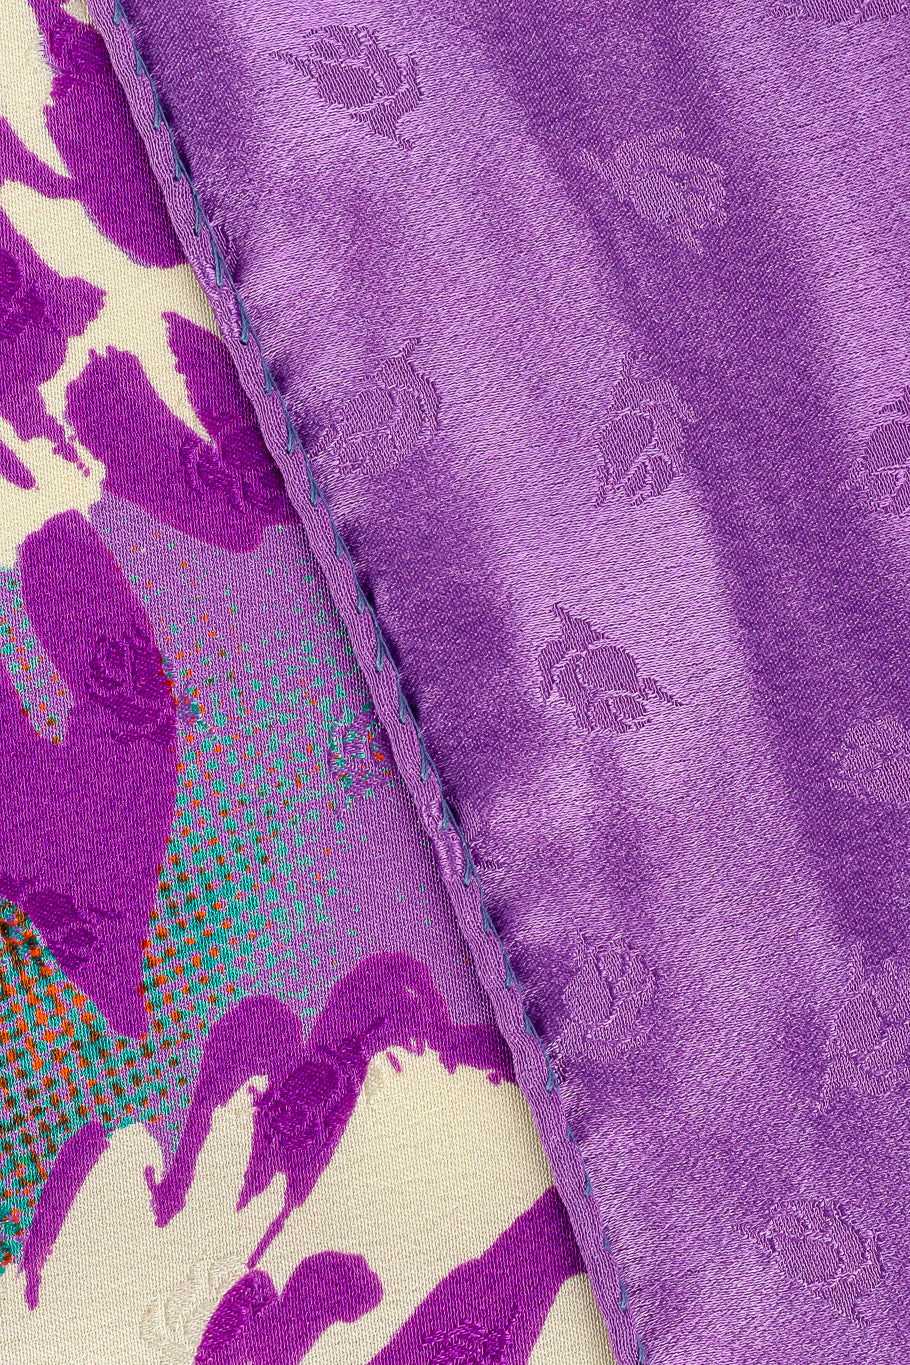 Silk crepe de chine scarf by Emanuel Ungaro Photo of fabric details. @recessla